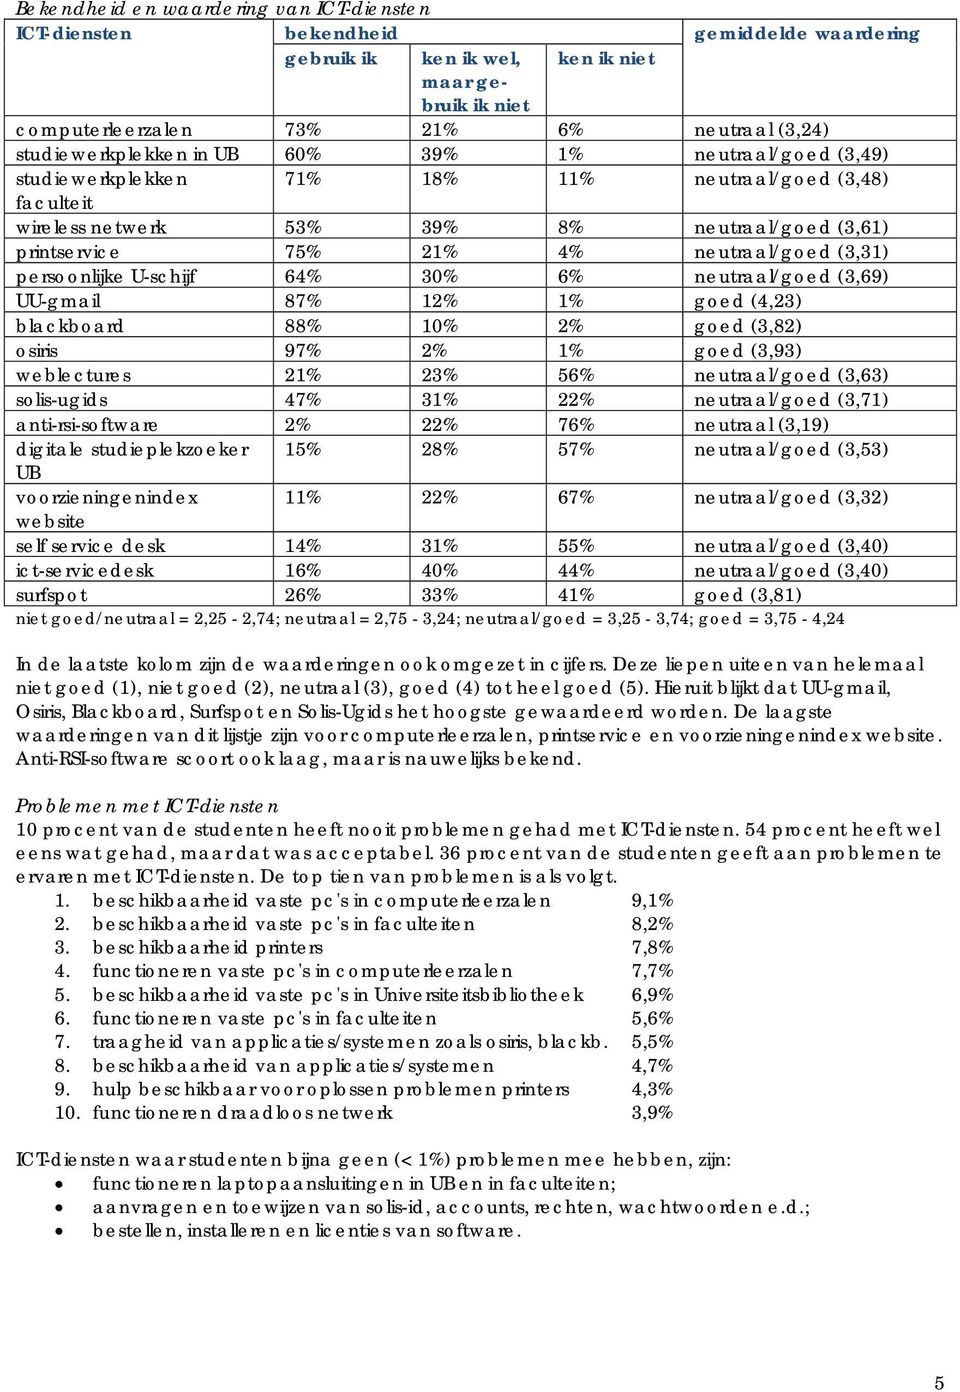 neutraal/goed (3,31) persoonlijke U-schijf 64% 30% 6% neutraal/goed (3,69) UU-gmail 87% 12% 1% goed (4,23) blackboard 88% 10% 2% goed (3,82) osiris 97% 2% 1% goed (3,93) weblectures 21% 23% 56%